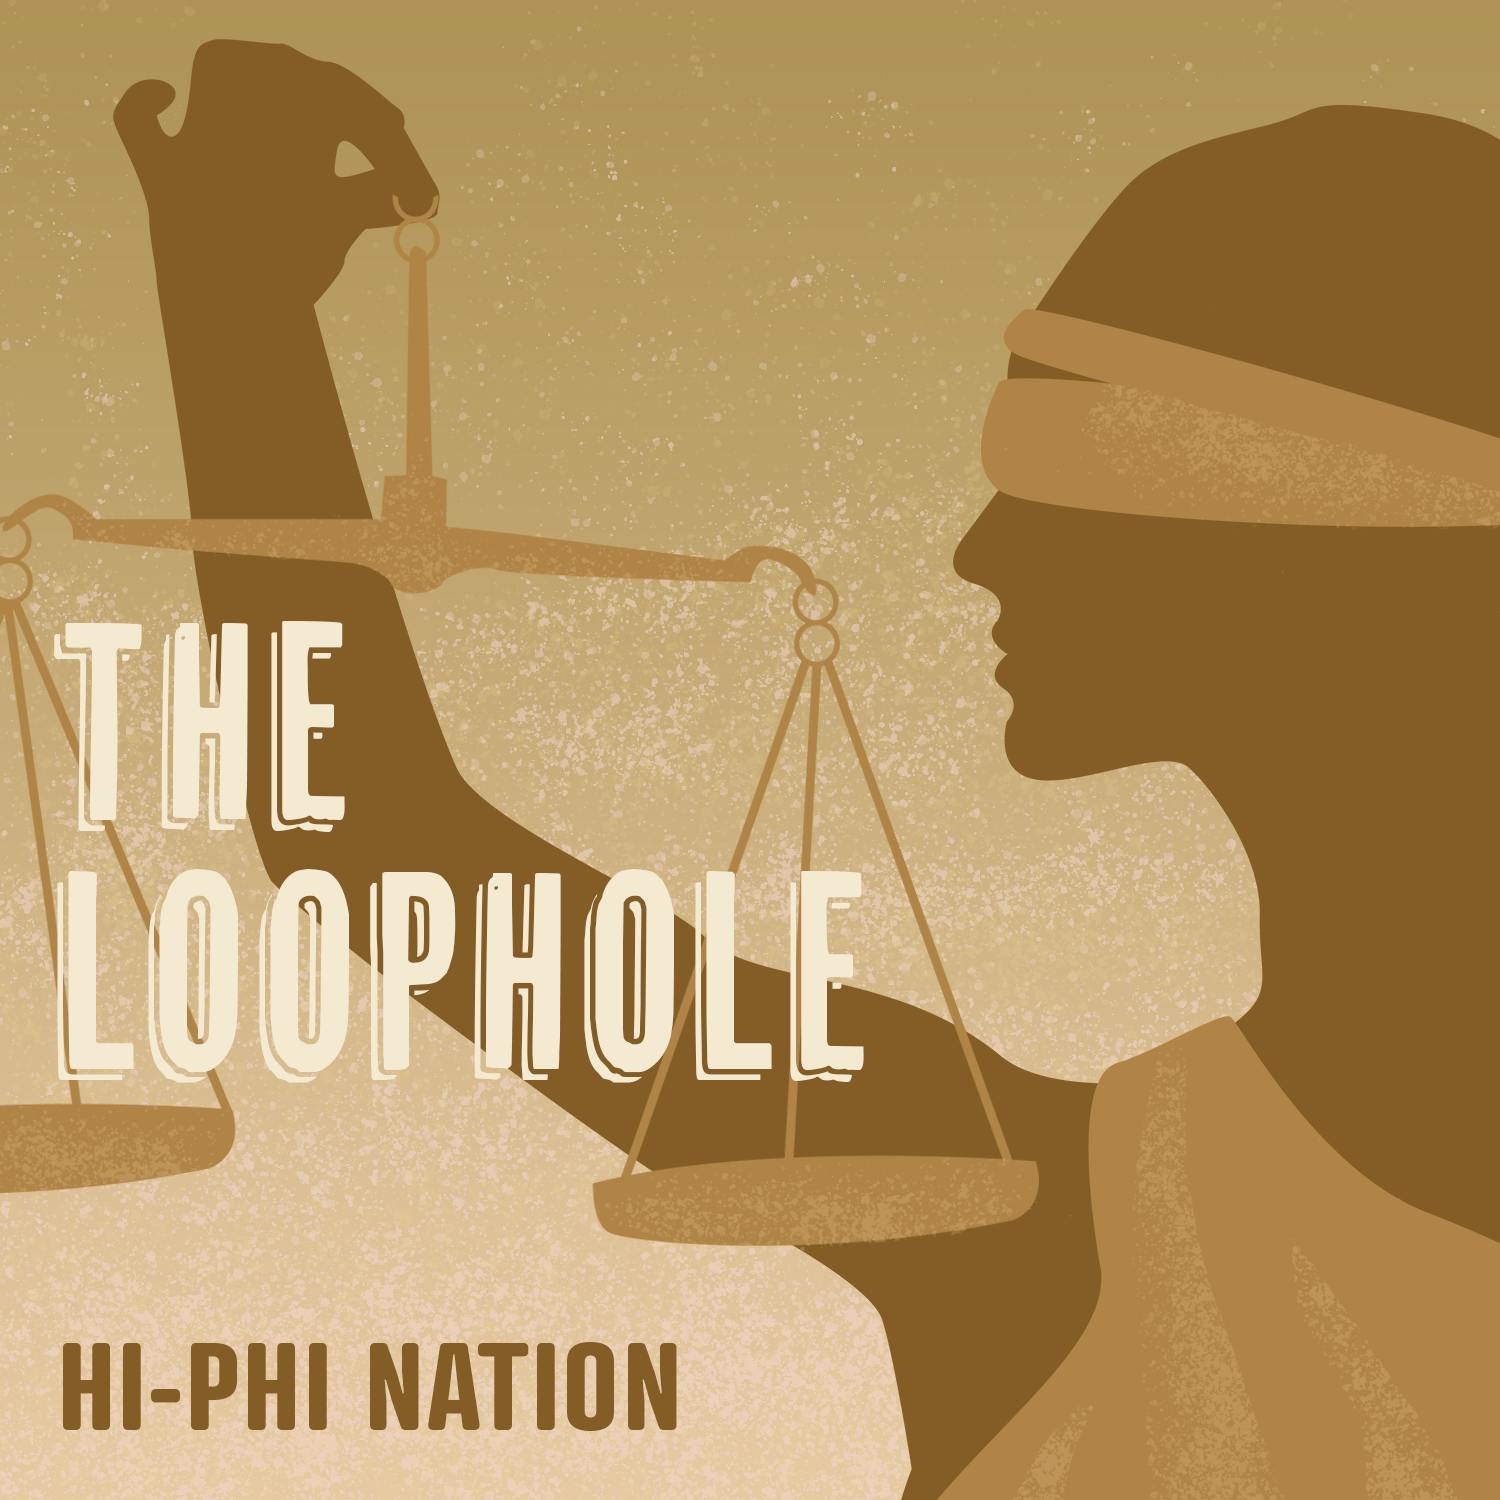 The Loophole